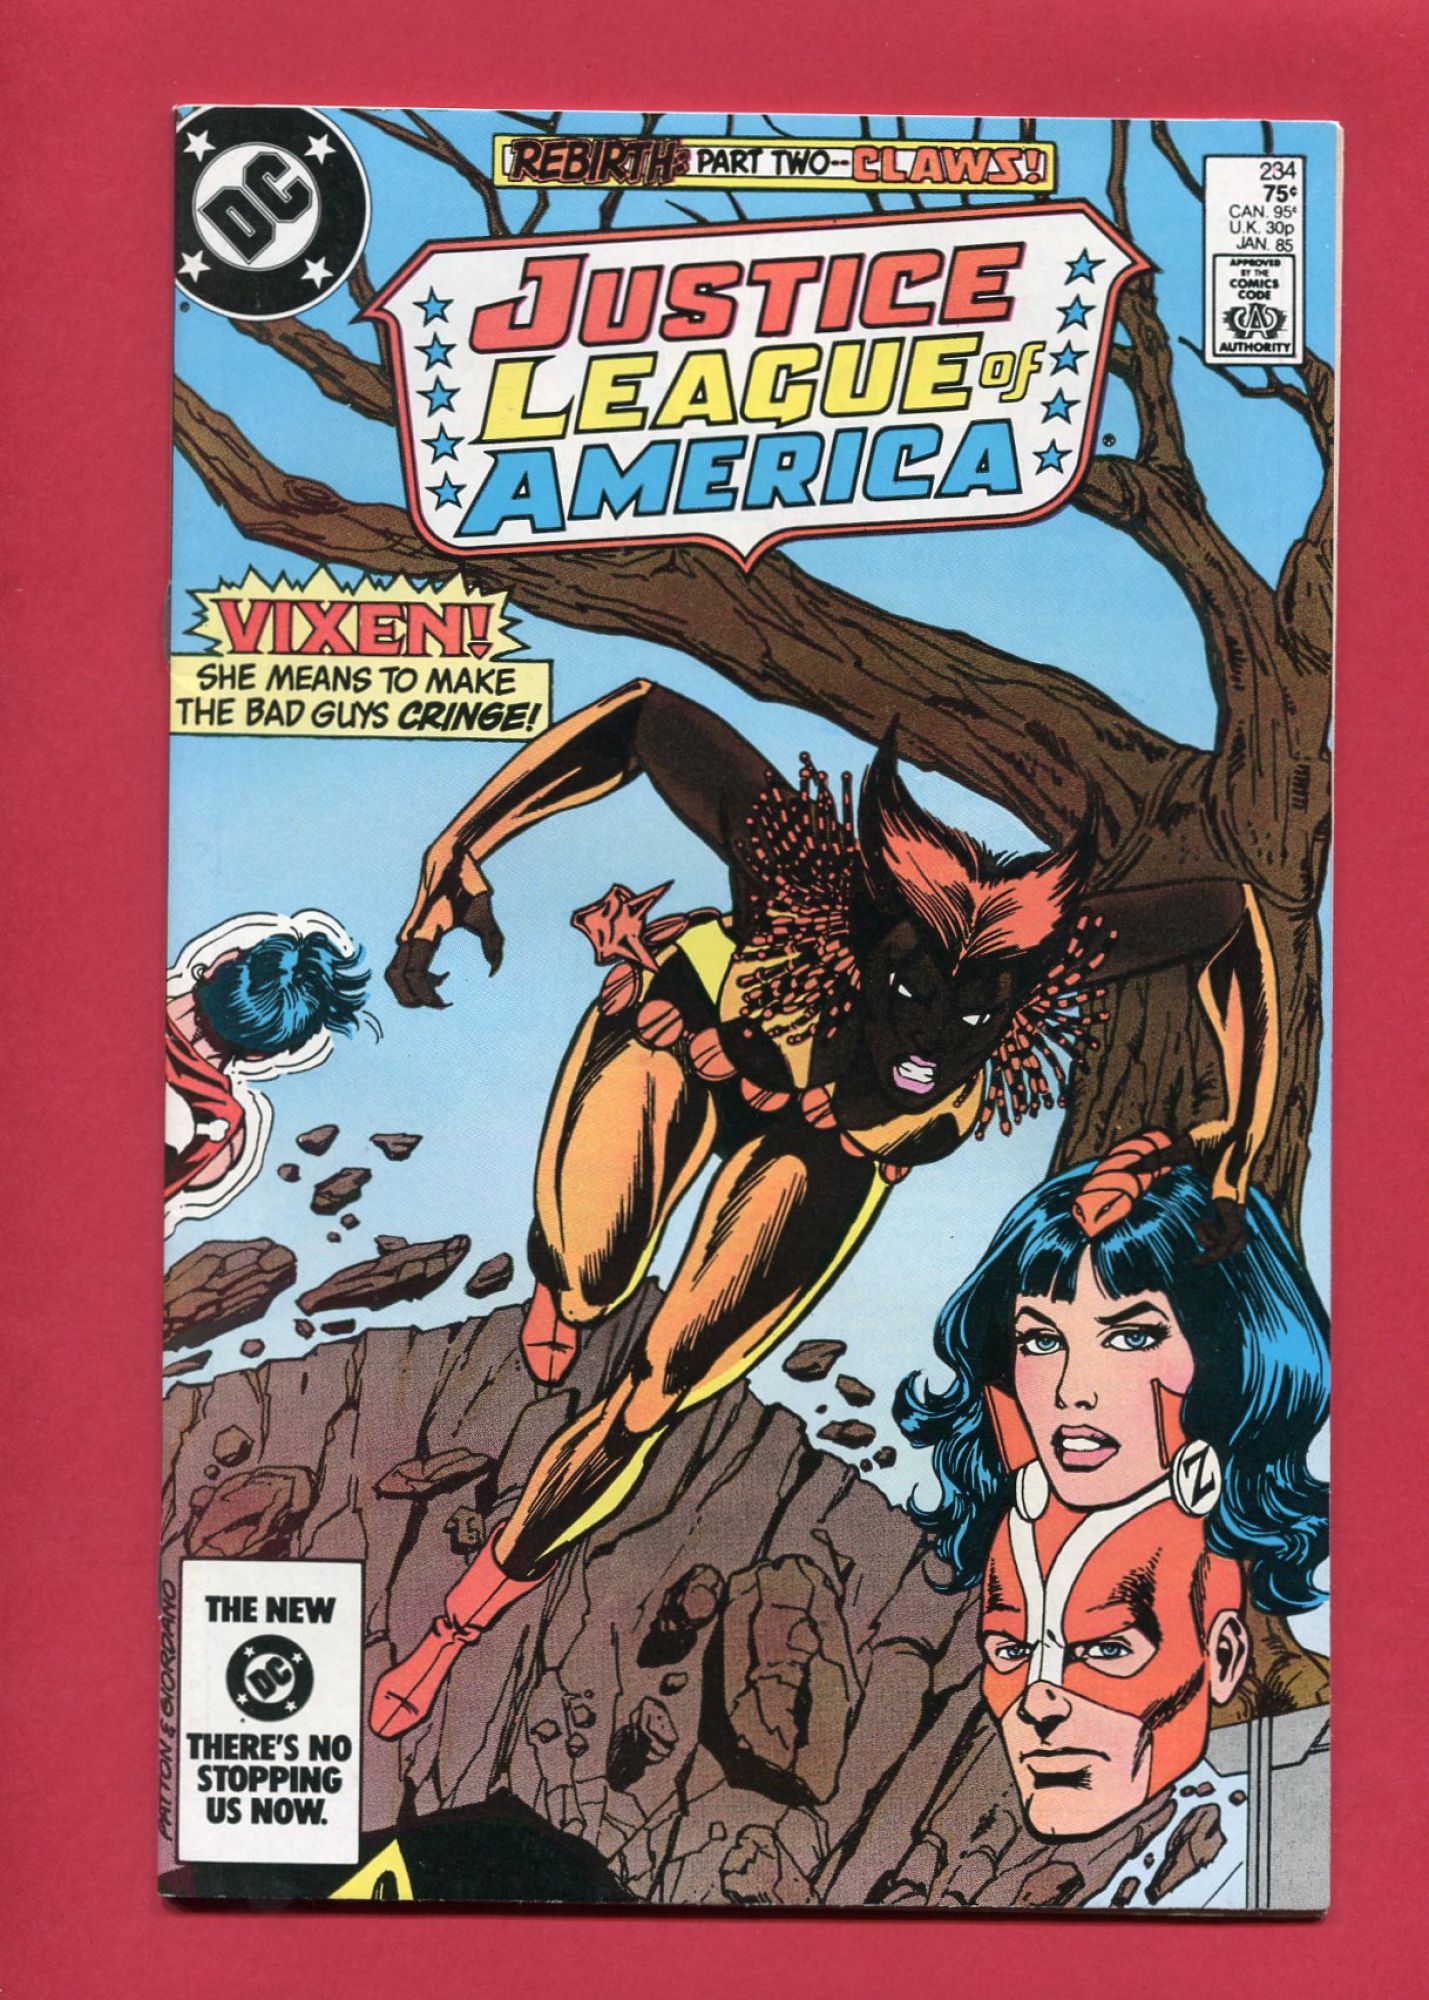 Justice League of America (Volume 1 1960) #234, Jan 1985, 9.2 NM-